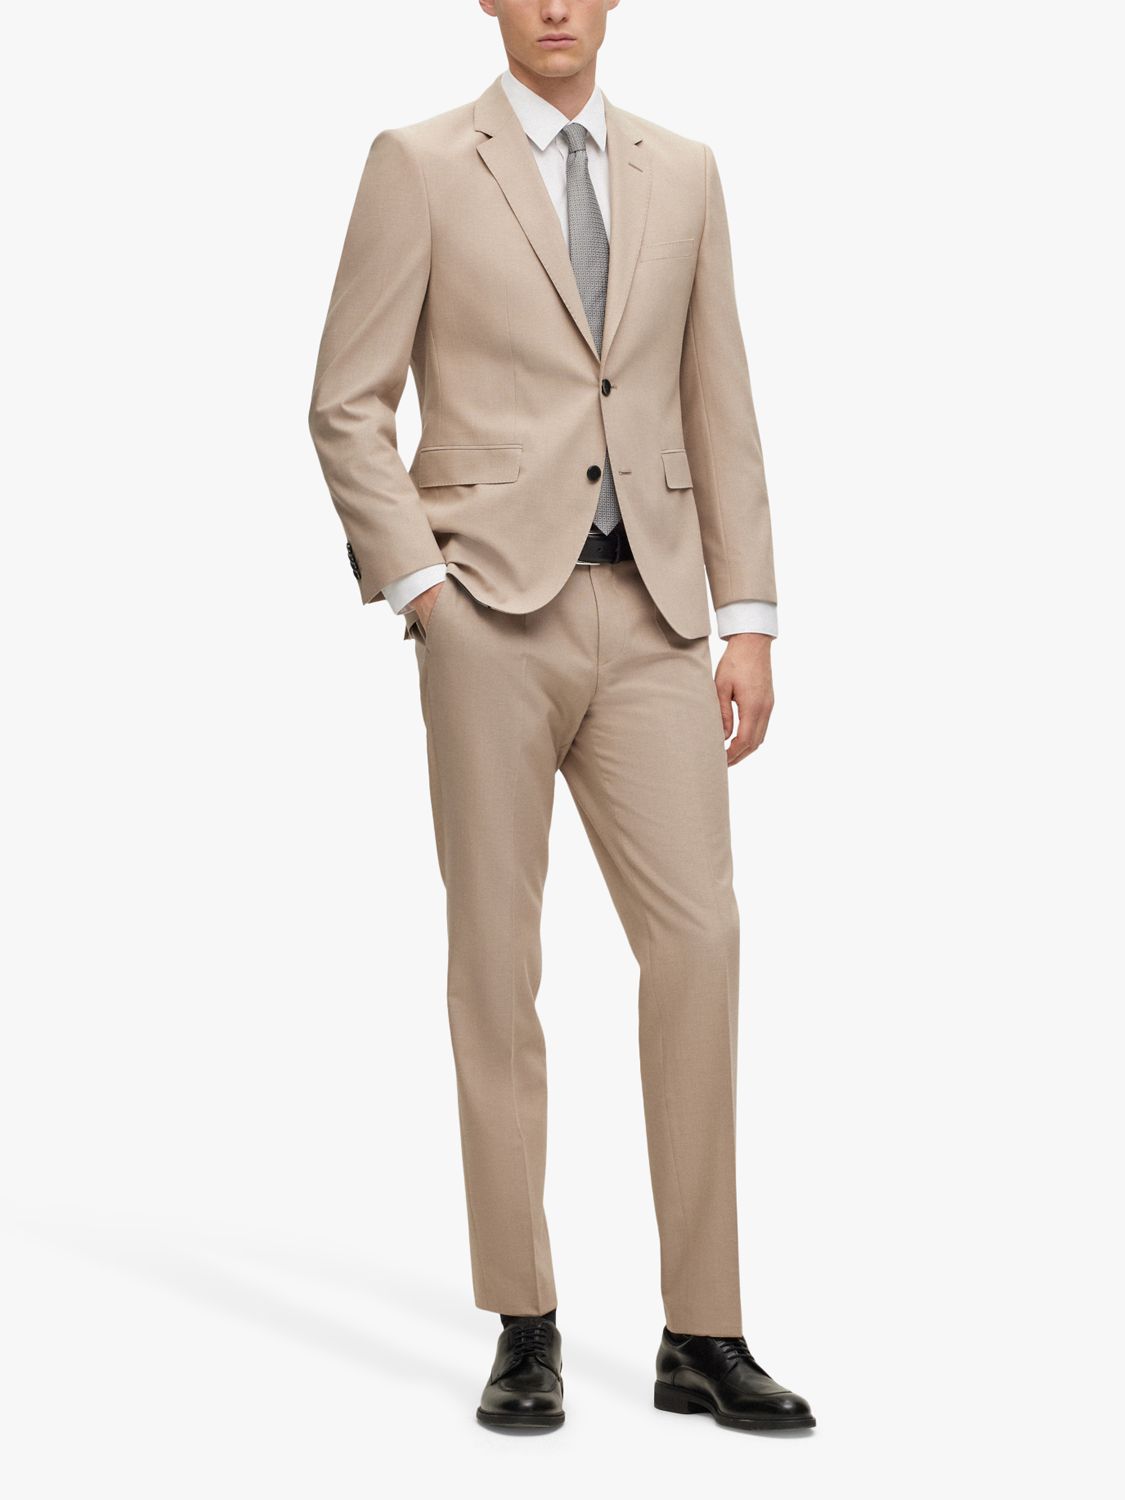 HUGO BOSS Leon Wool Blend Suit Trousers, Open White, 34R